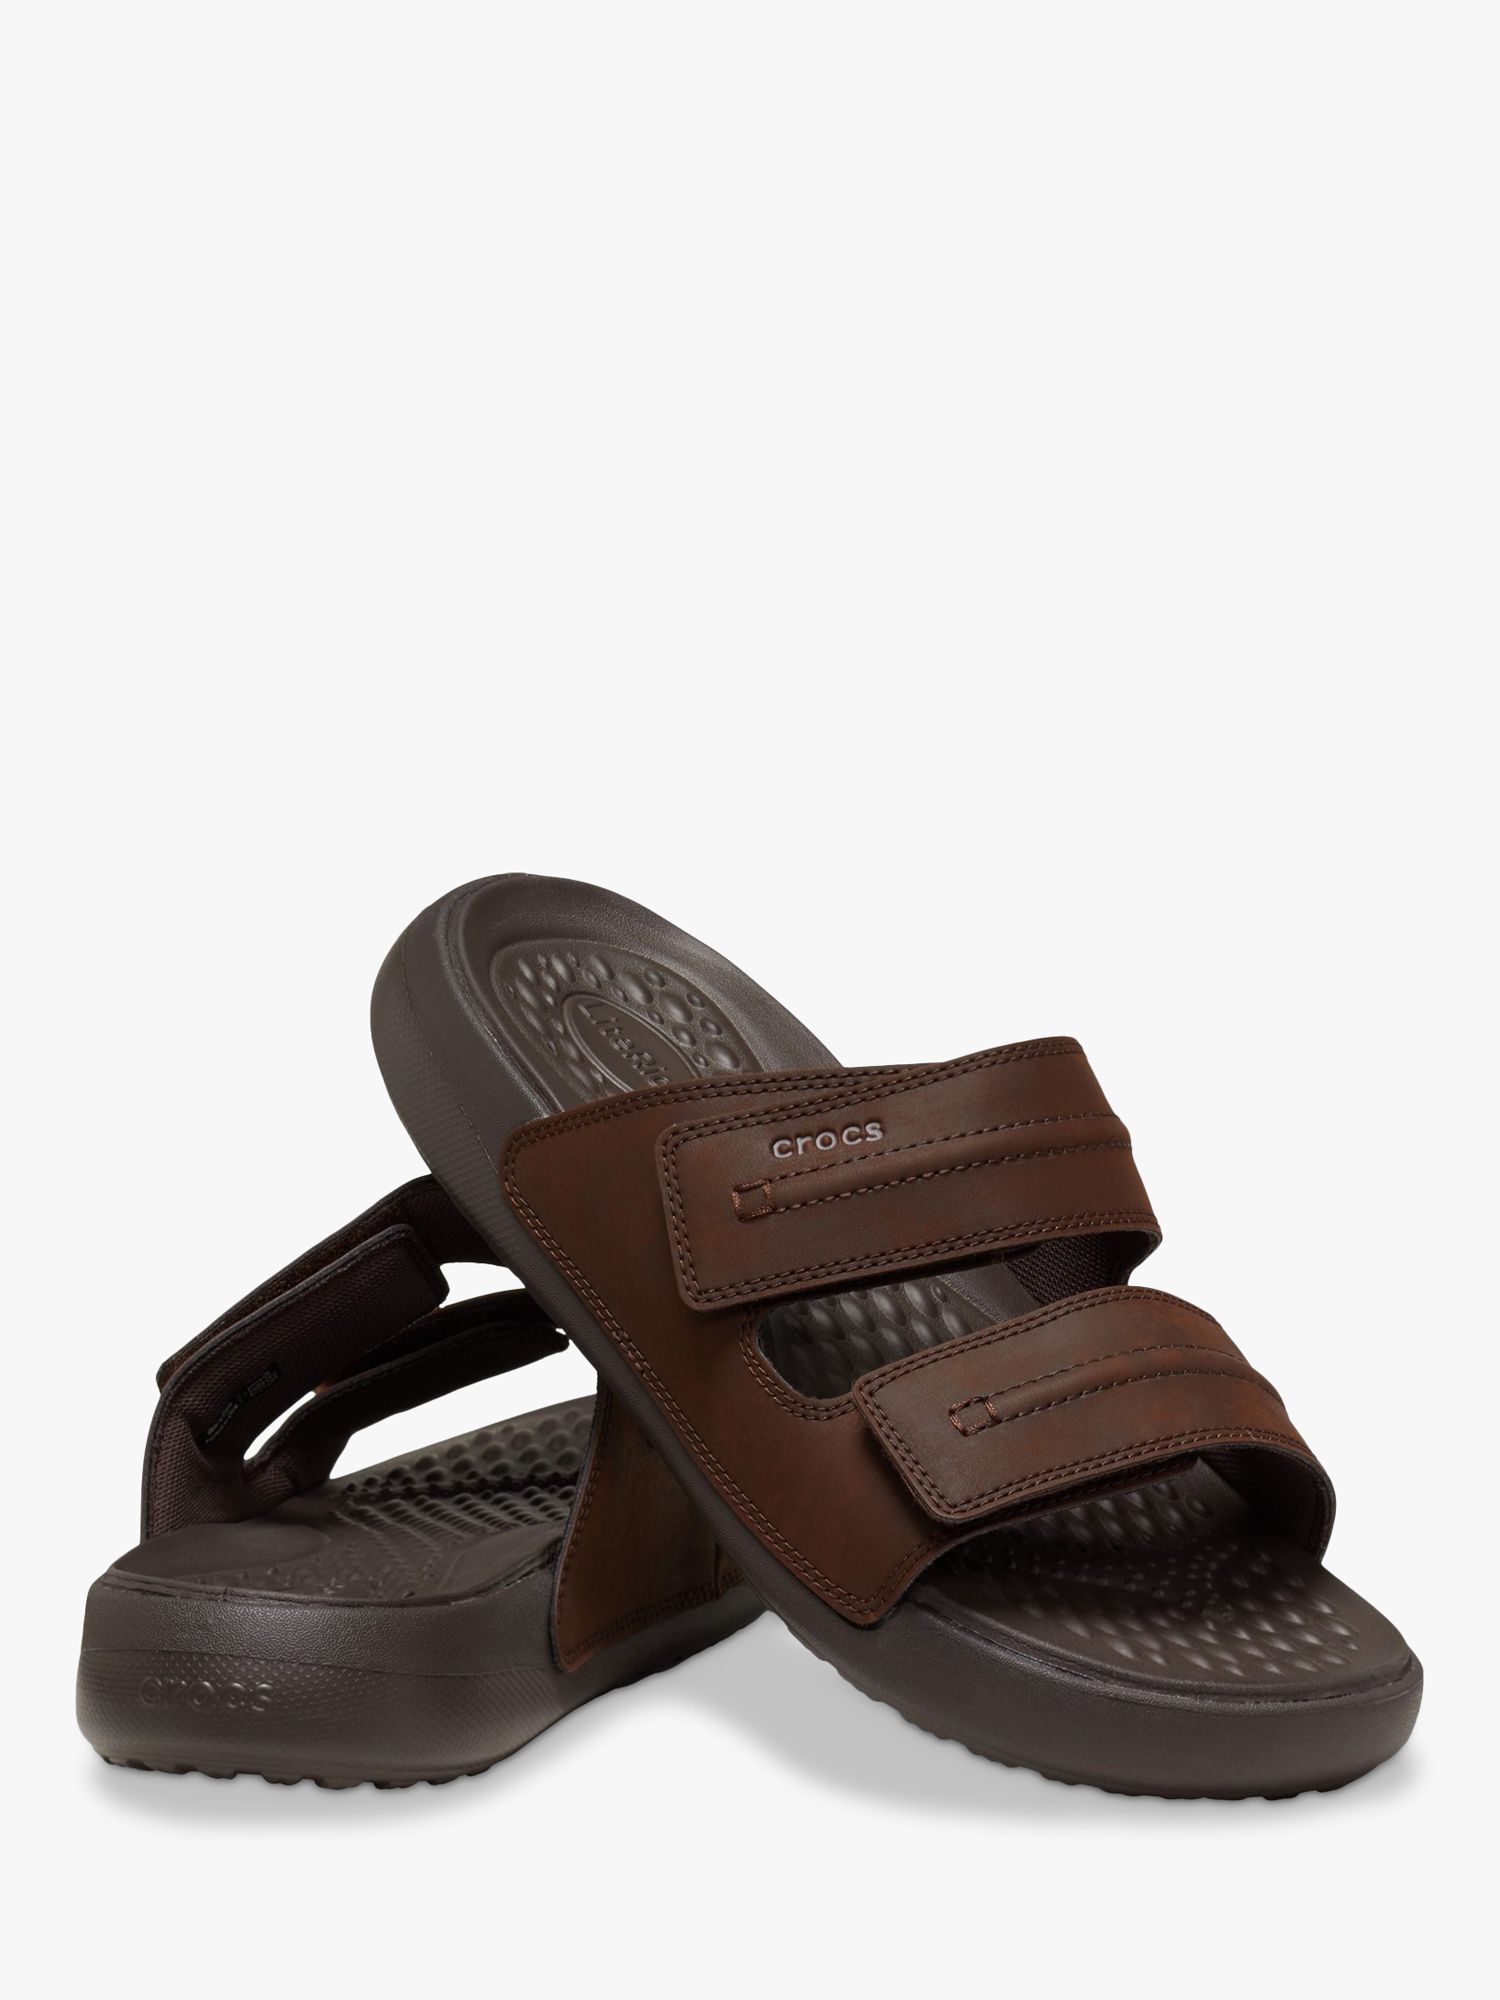 Crocs Yukon Vista II Sandals, Dark Brown, 12